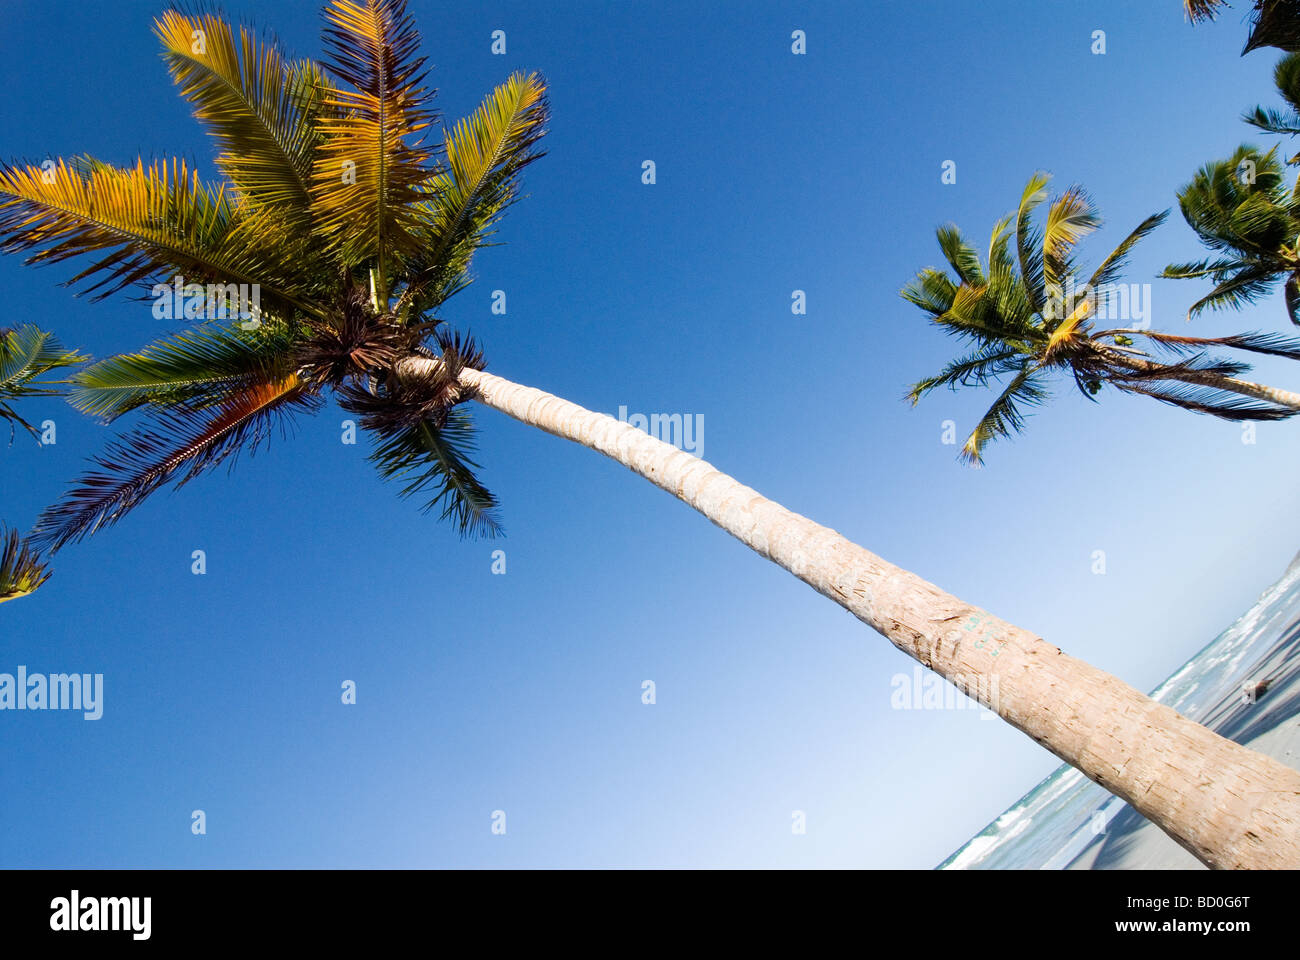 Palm trees on the island Isla de Margarita, Venezuela. Stock Photo